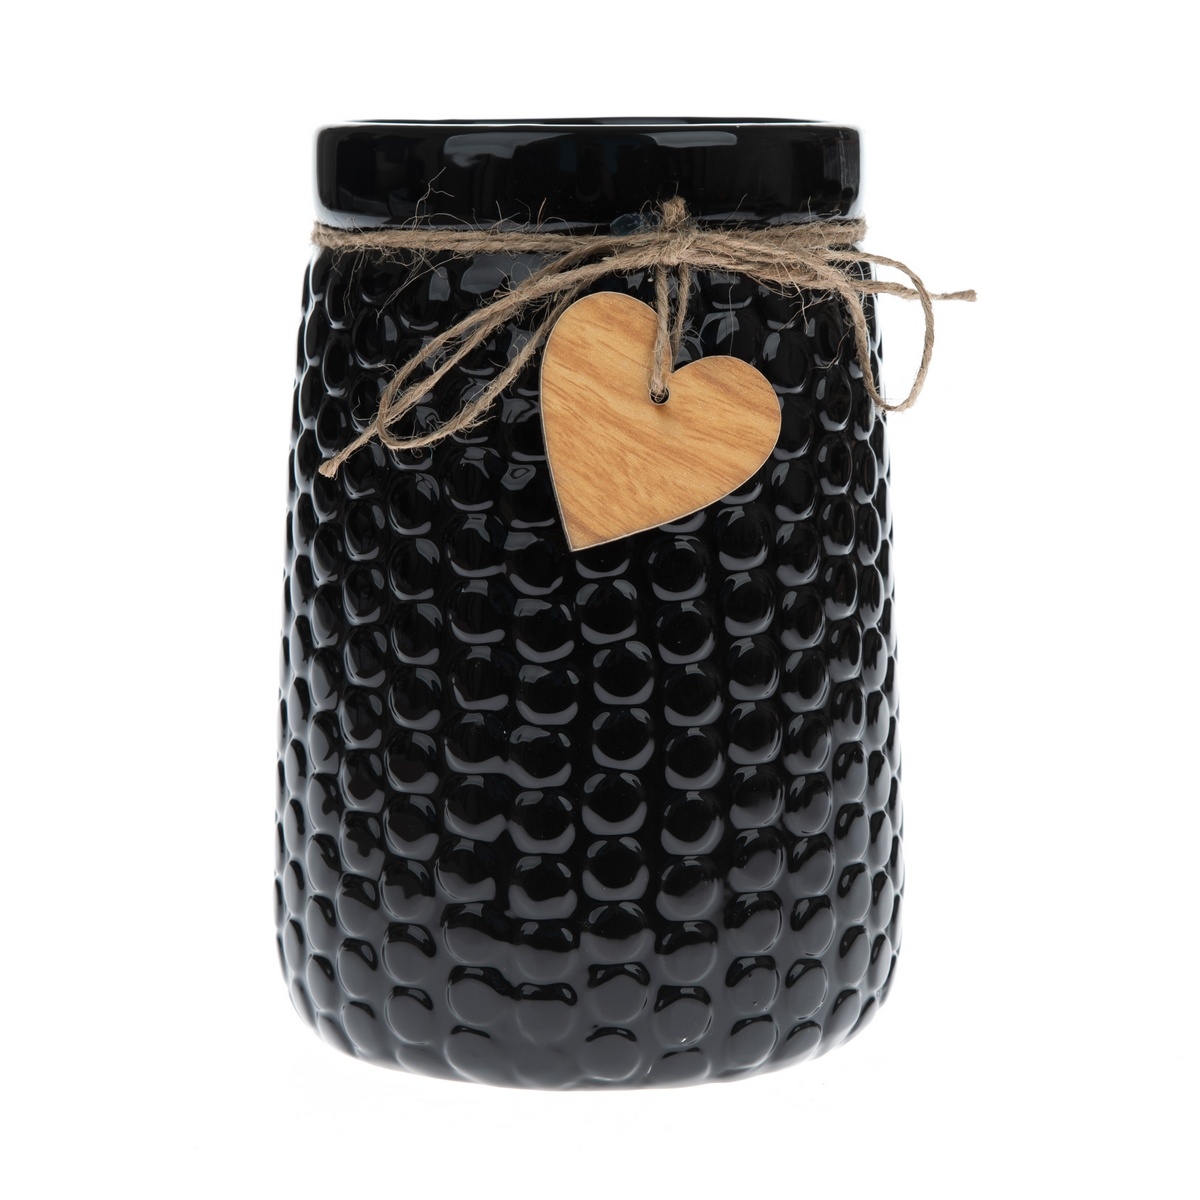 Poza Vaza din ceramica Wood heart negru, 12 x 17,5 cm